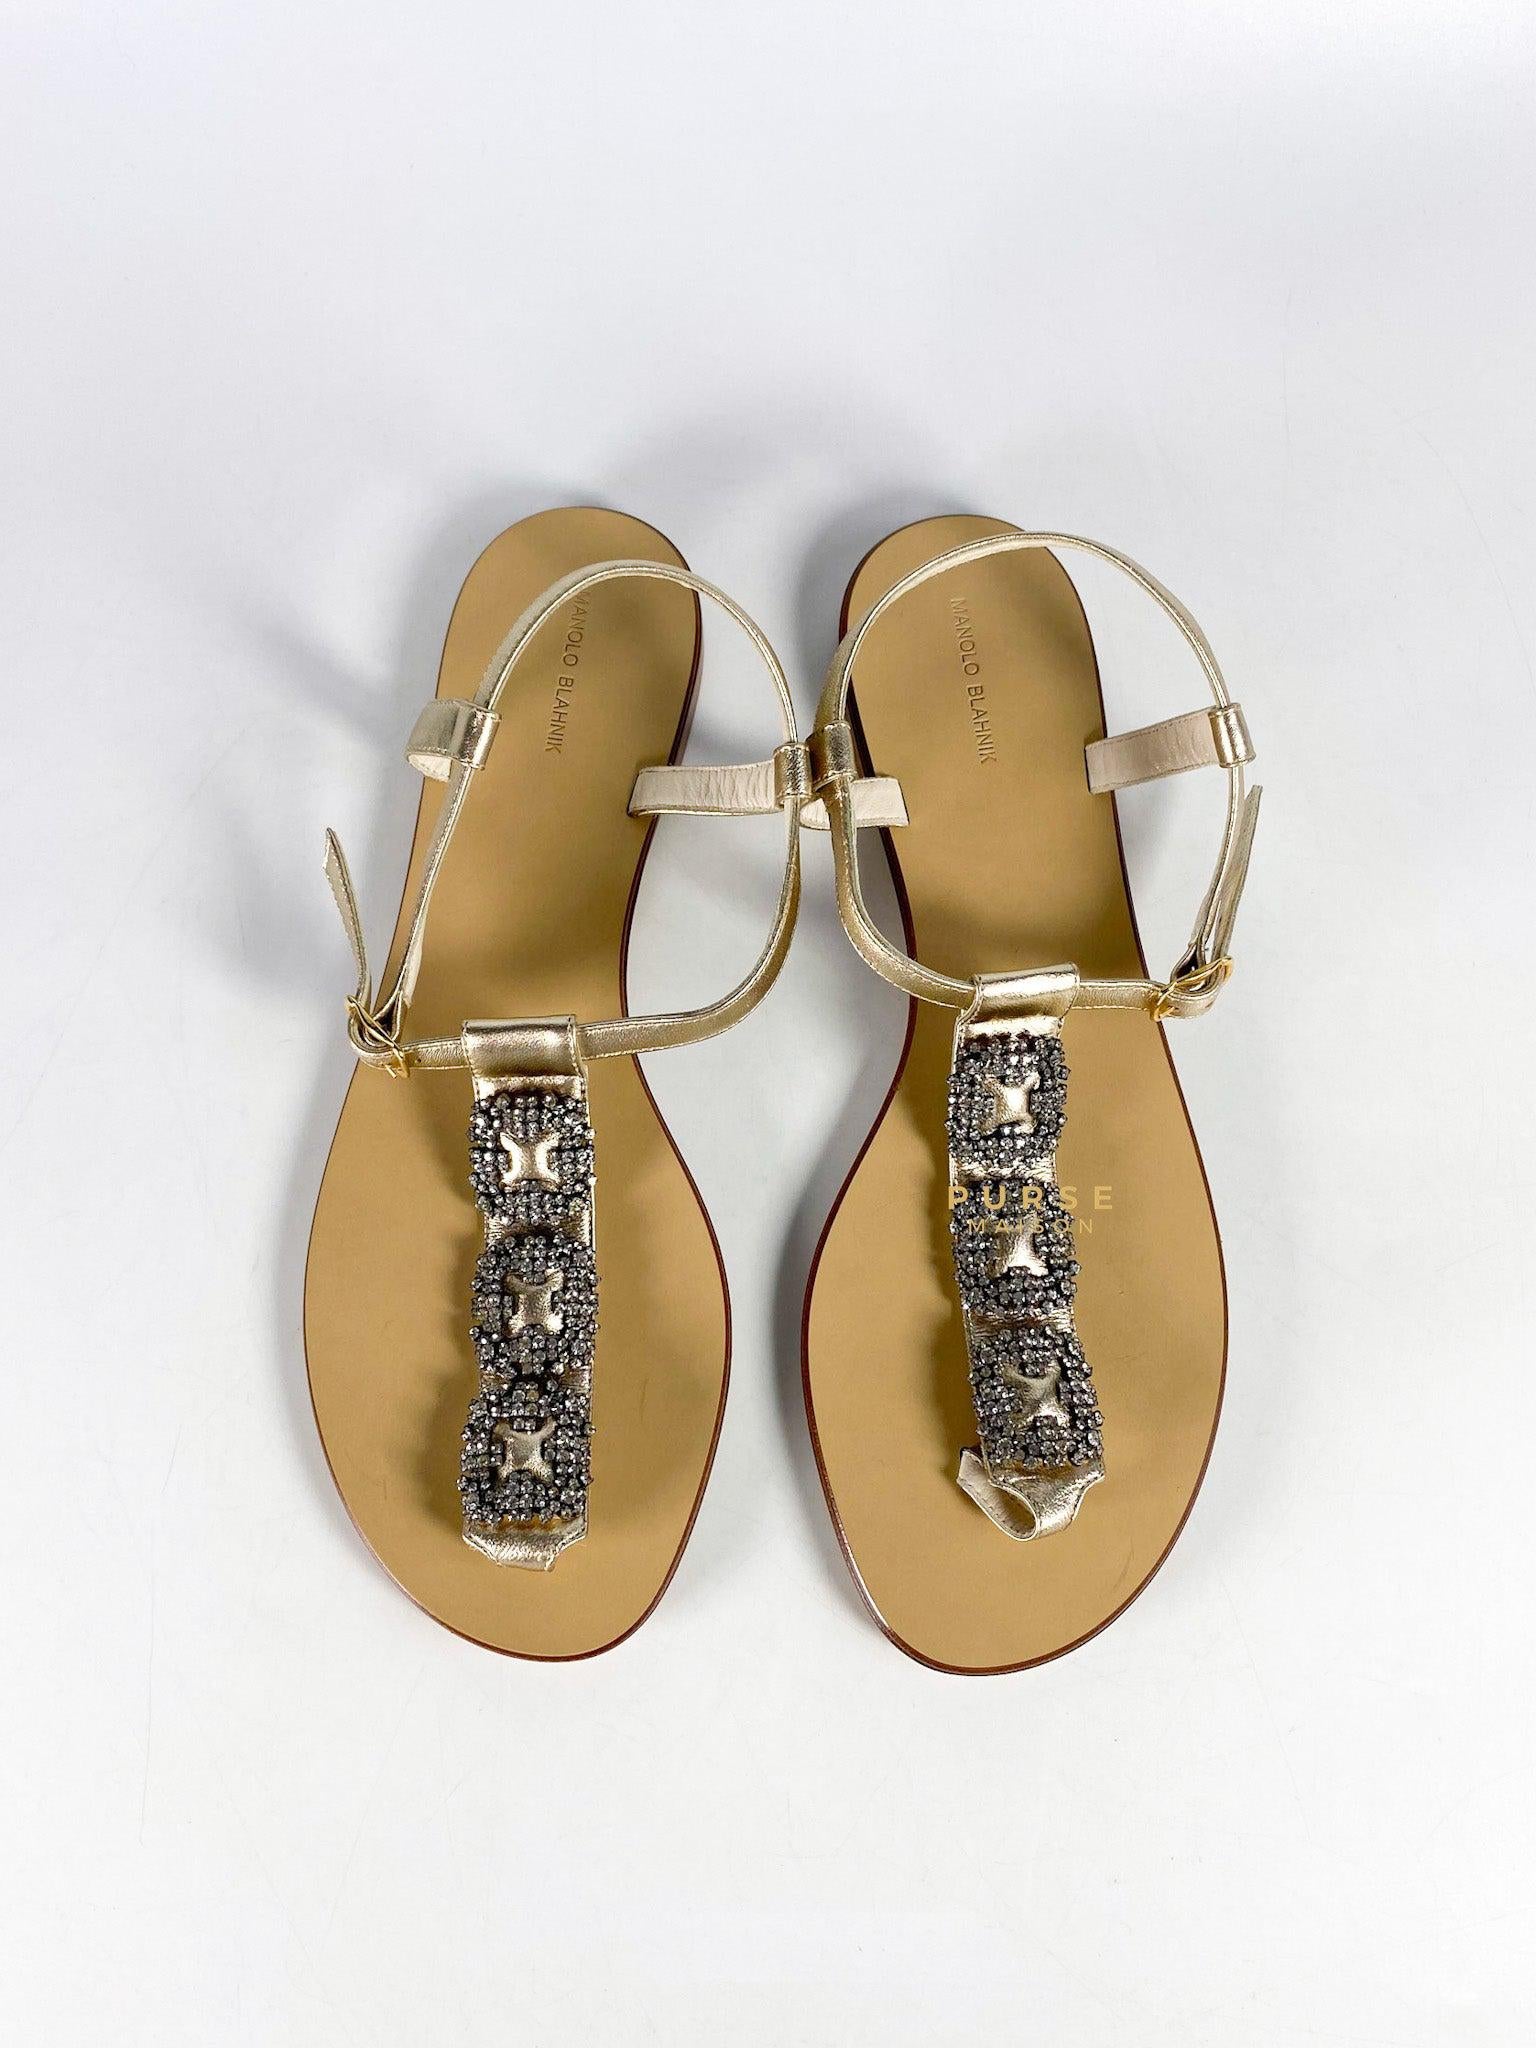 Manolo Blahnik T-Strap Flat Sandals Size 38.5 (24.5cm) |